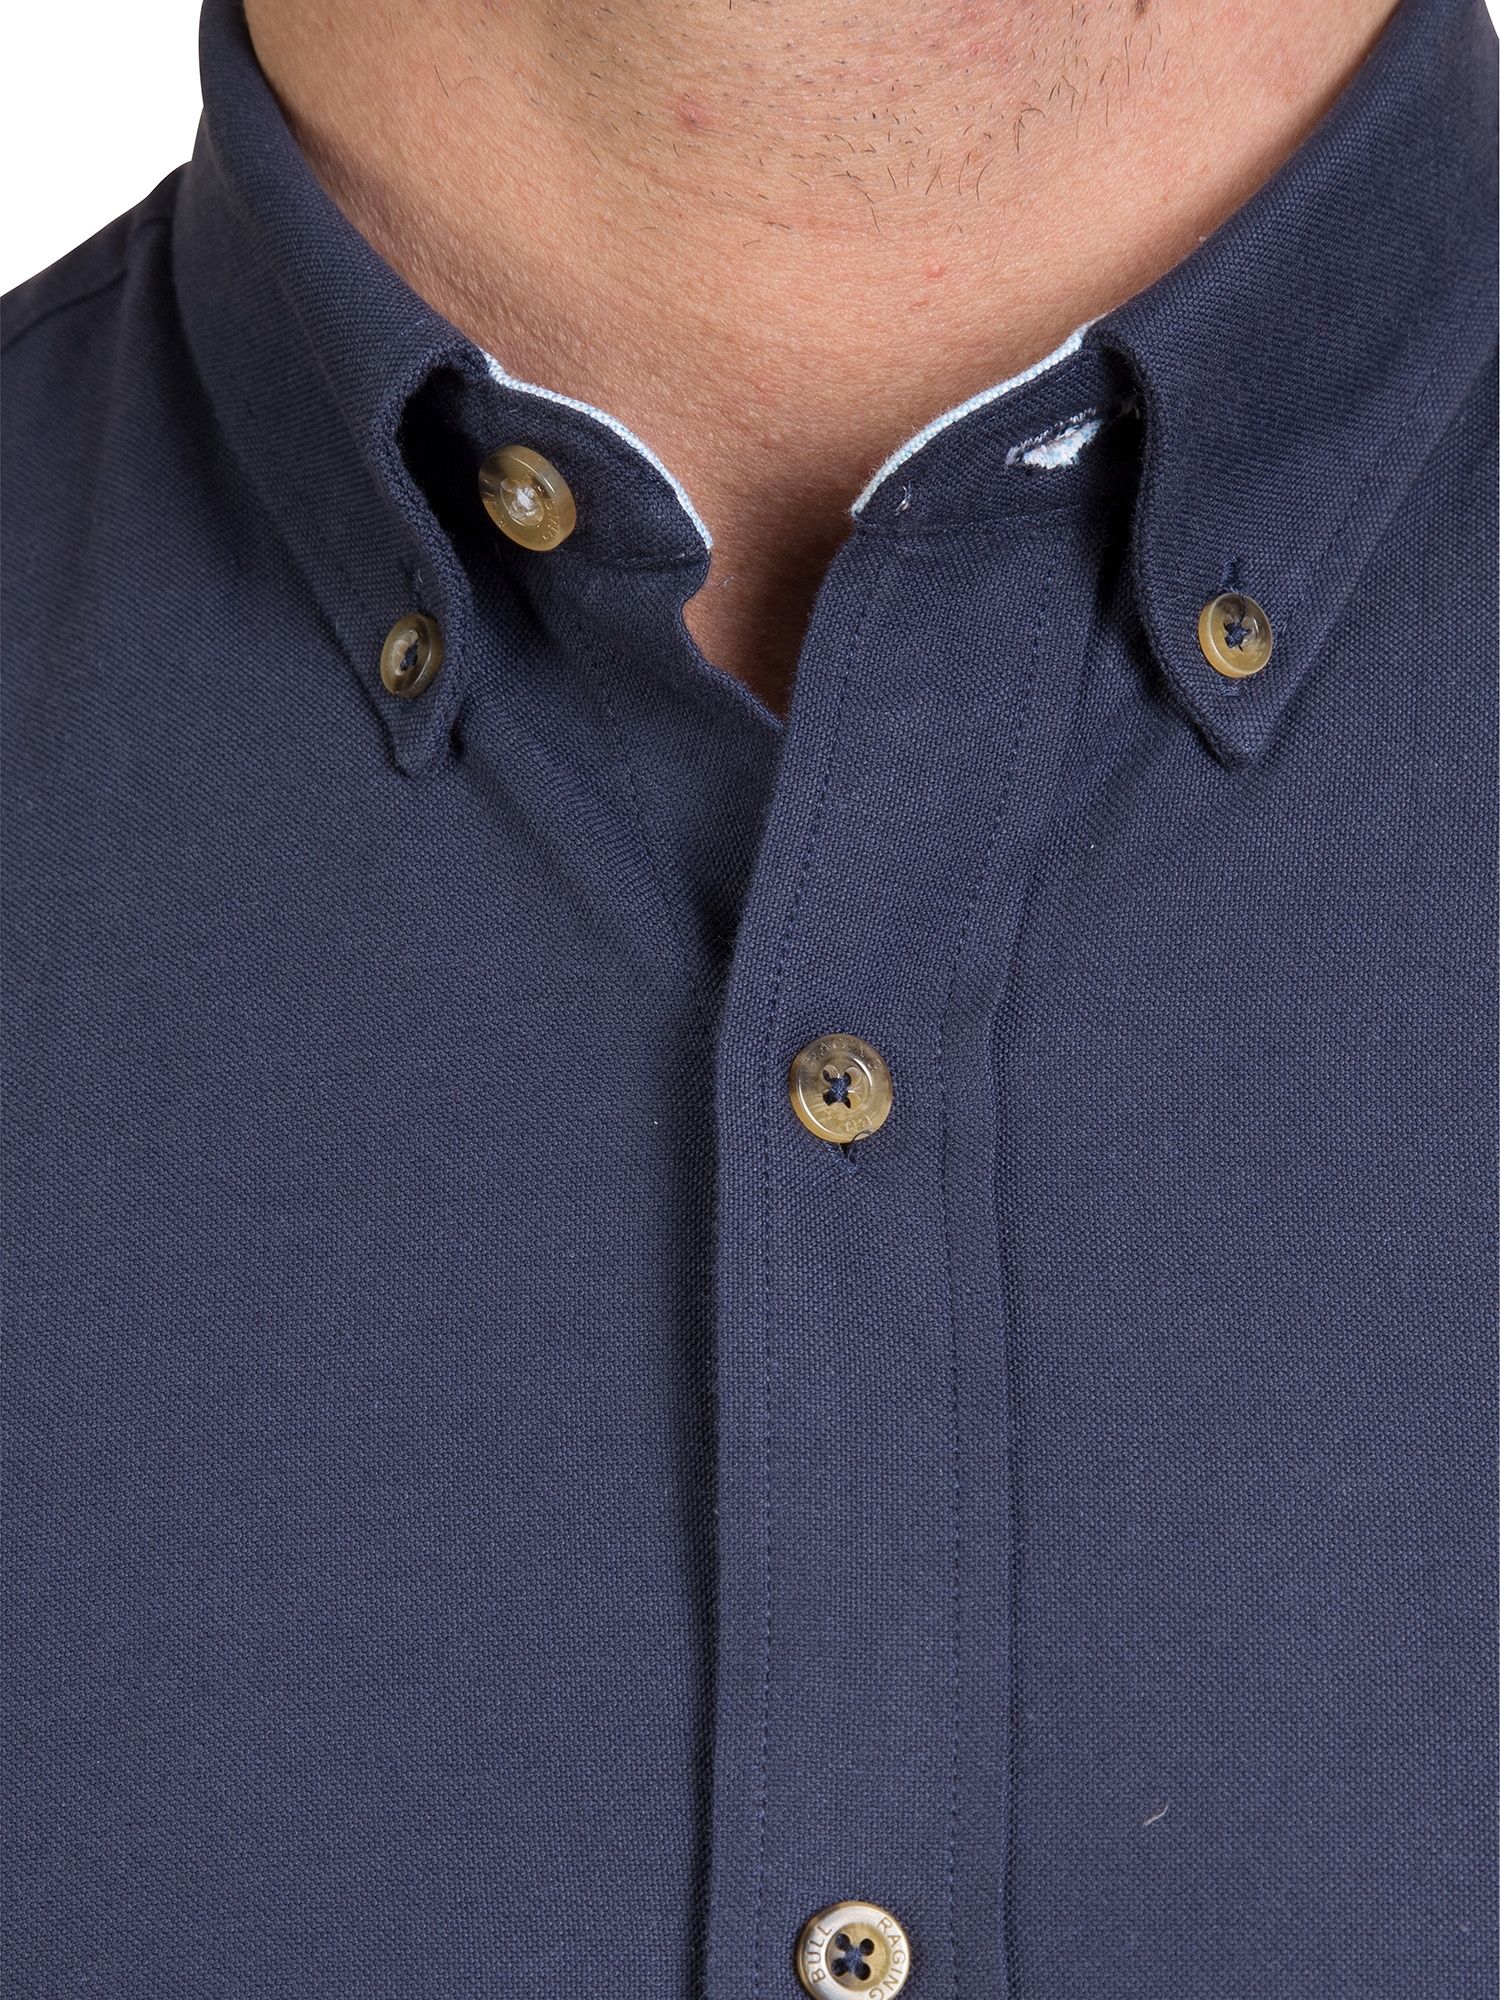 Raging Bull Classic Oxford Shirt, Navy, S